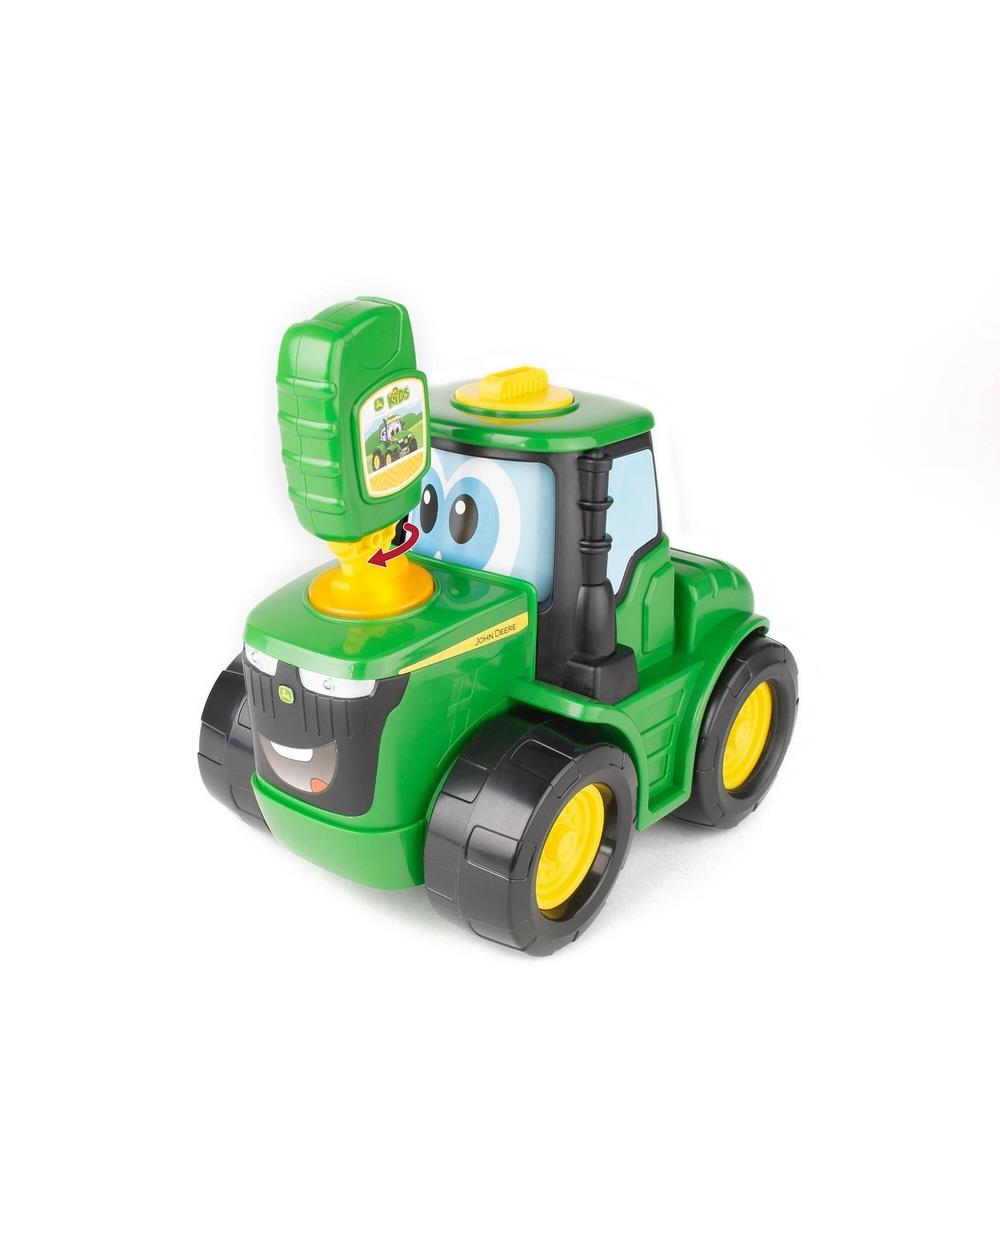 John Deere - Key n Go Johnny Tractor - Vehicles (Multi) Key n Go Johnny Tractor